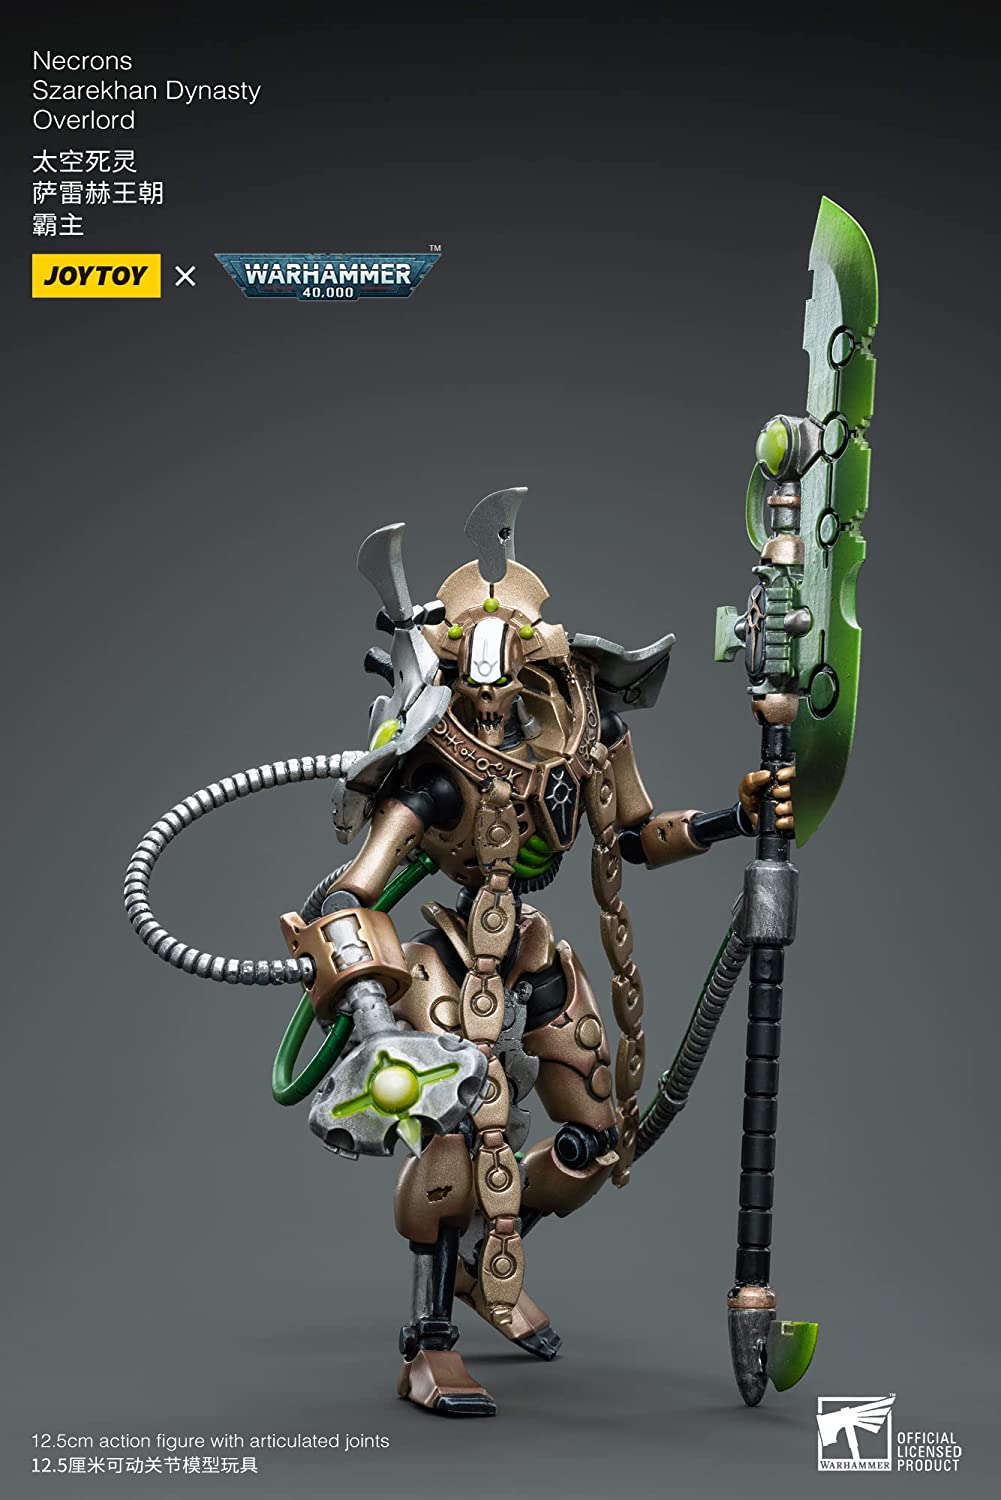 [JoyToy] Warhammer 40k: Necrons Szarekhan Dynasty Overlord 1:18 Scale Action Figure JT4133